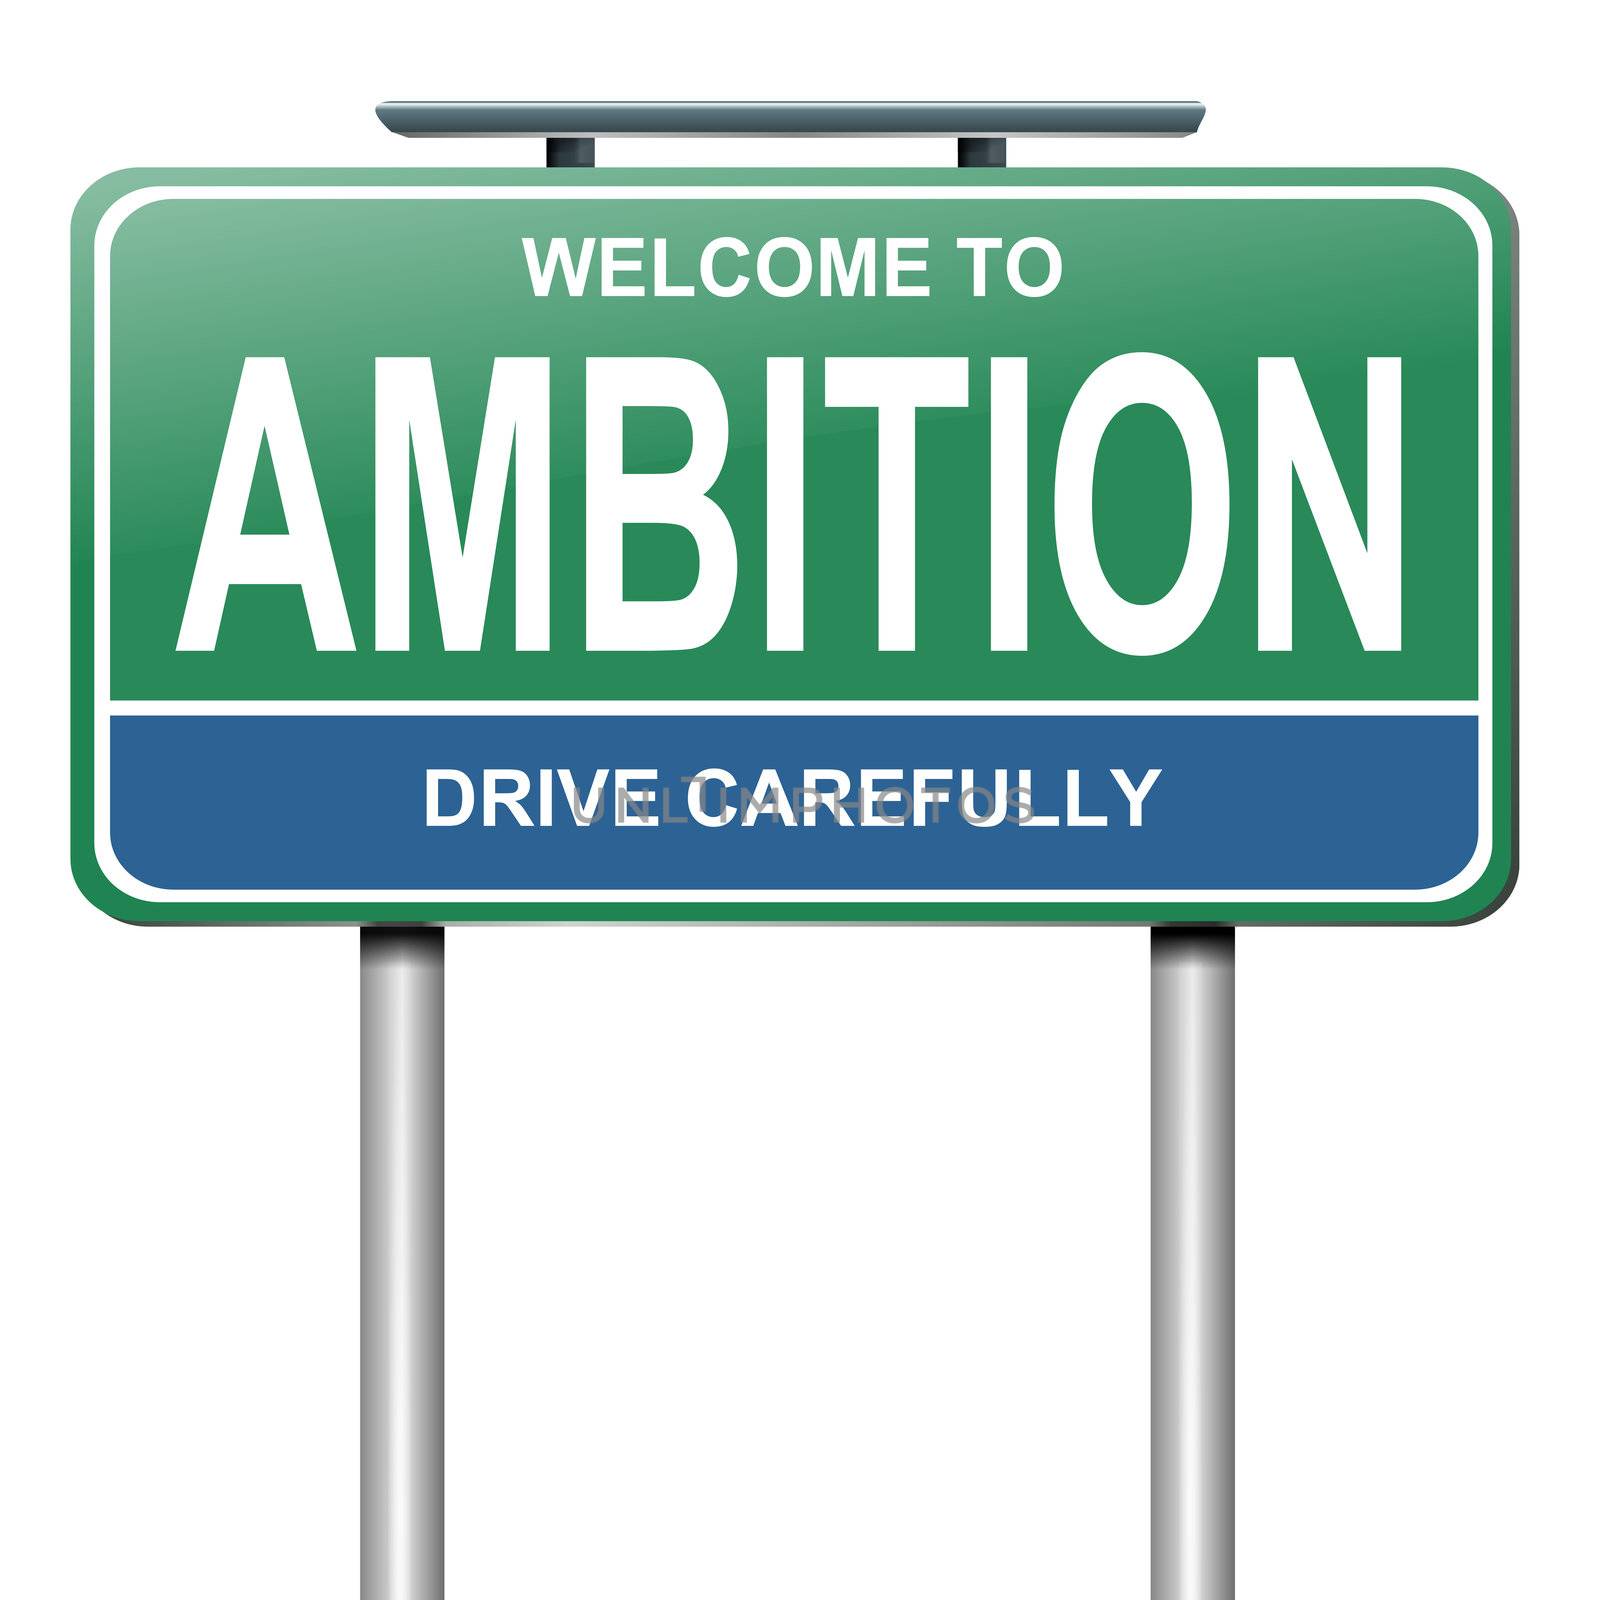 Ambition concept, by 72soul